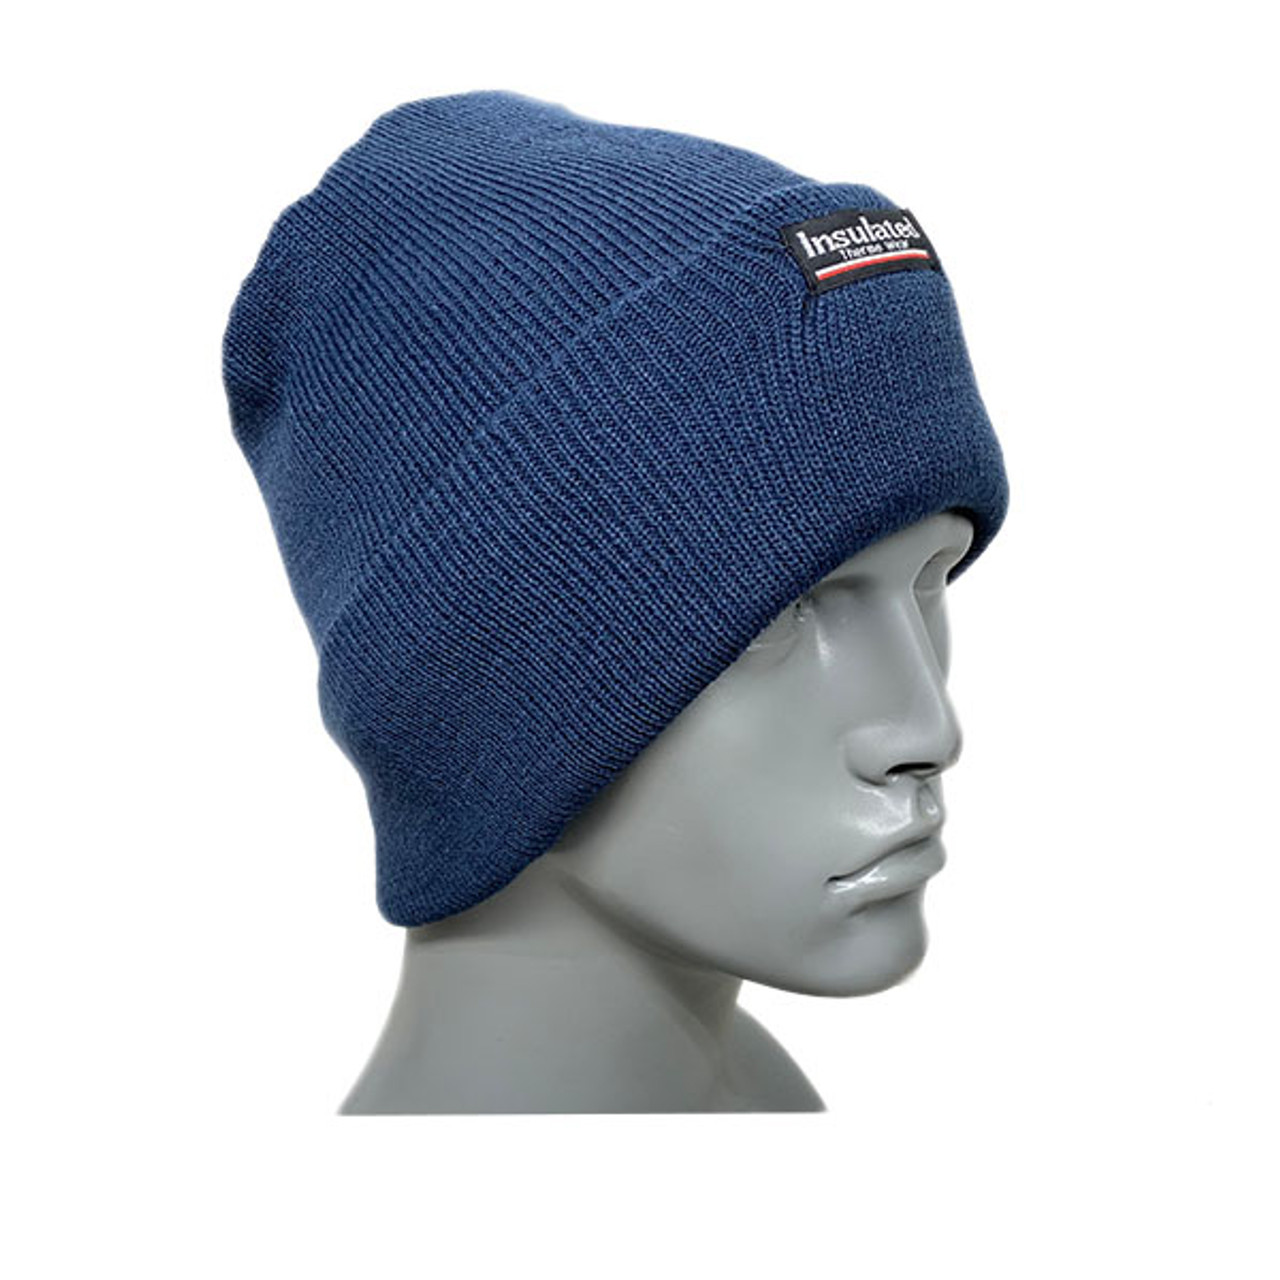 KC200 acrylic knit hat in navy blue